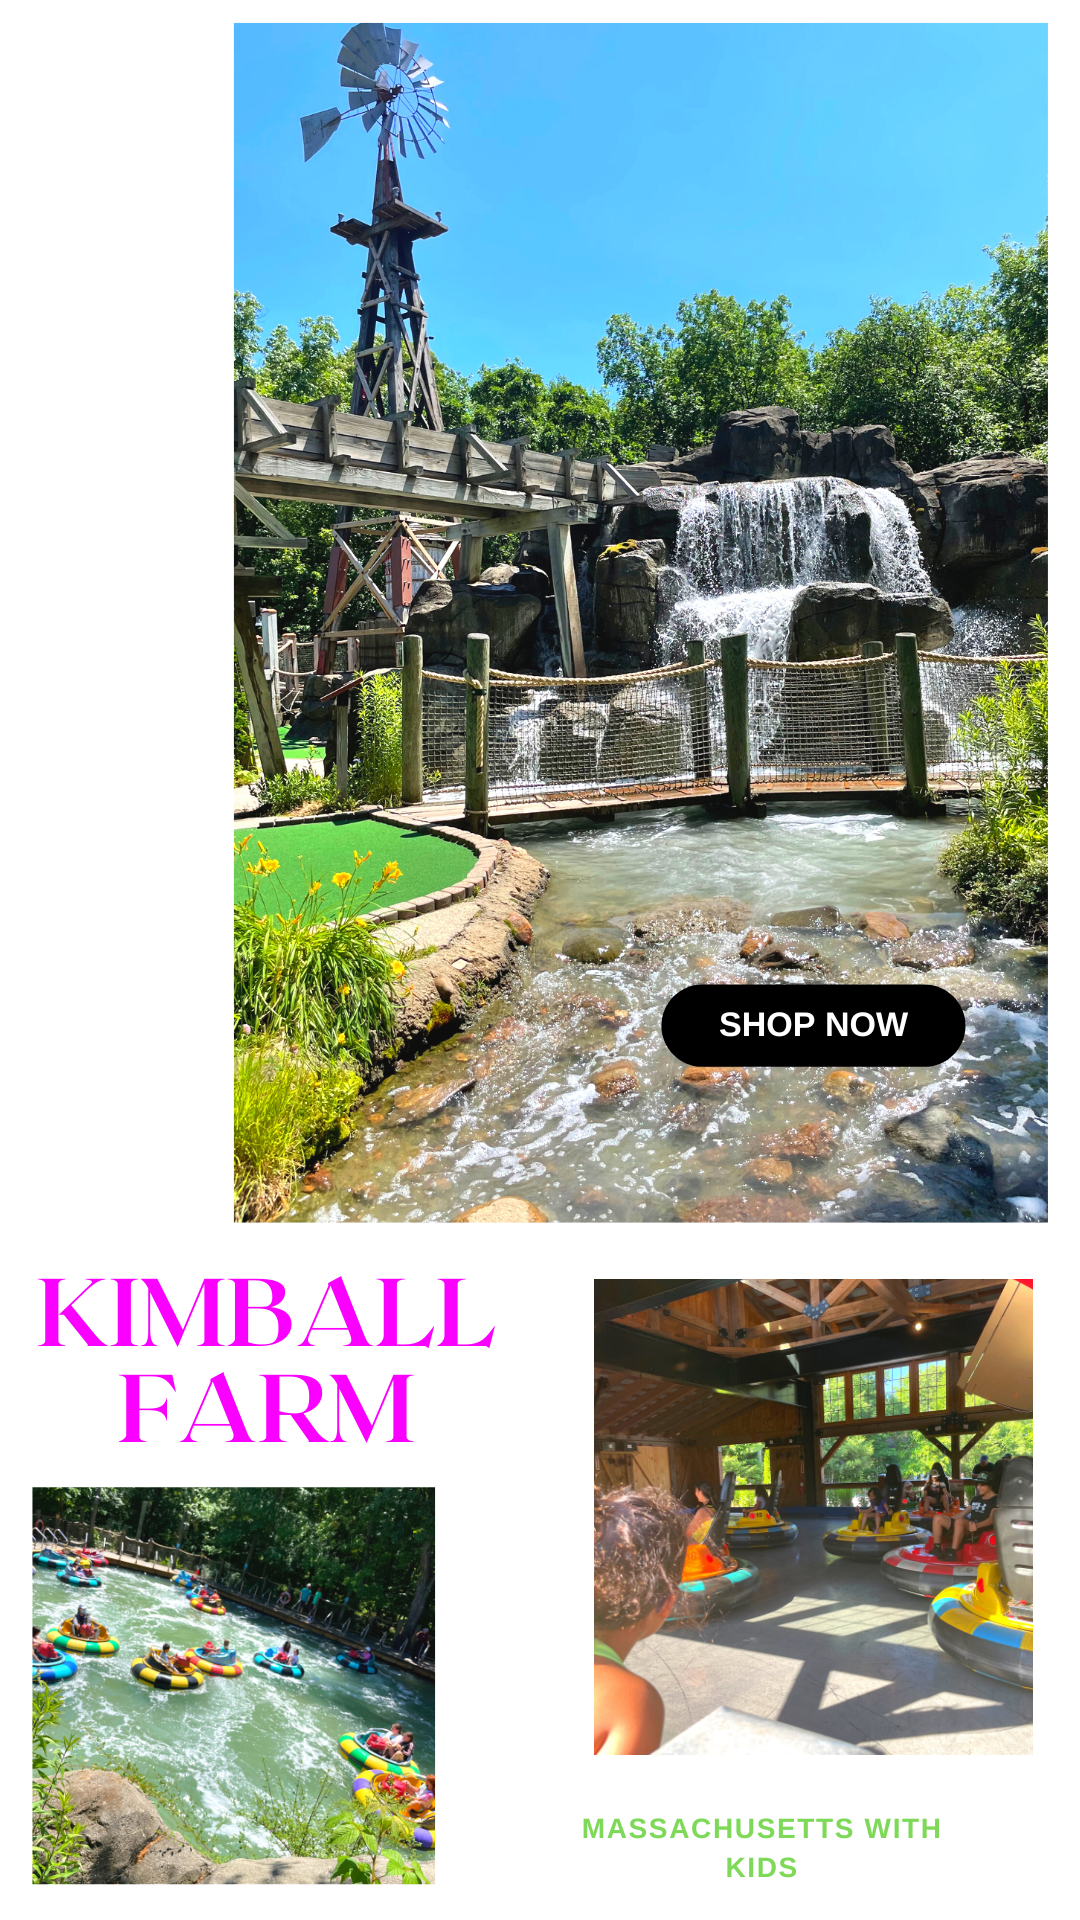 kimball Farm with kids in Massachusetts